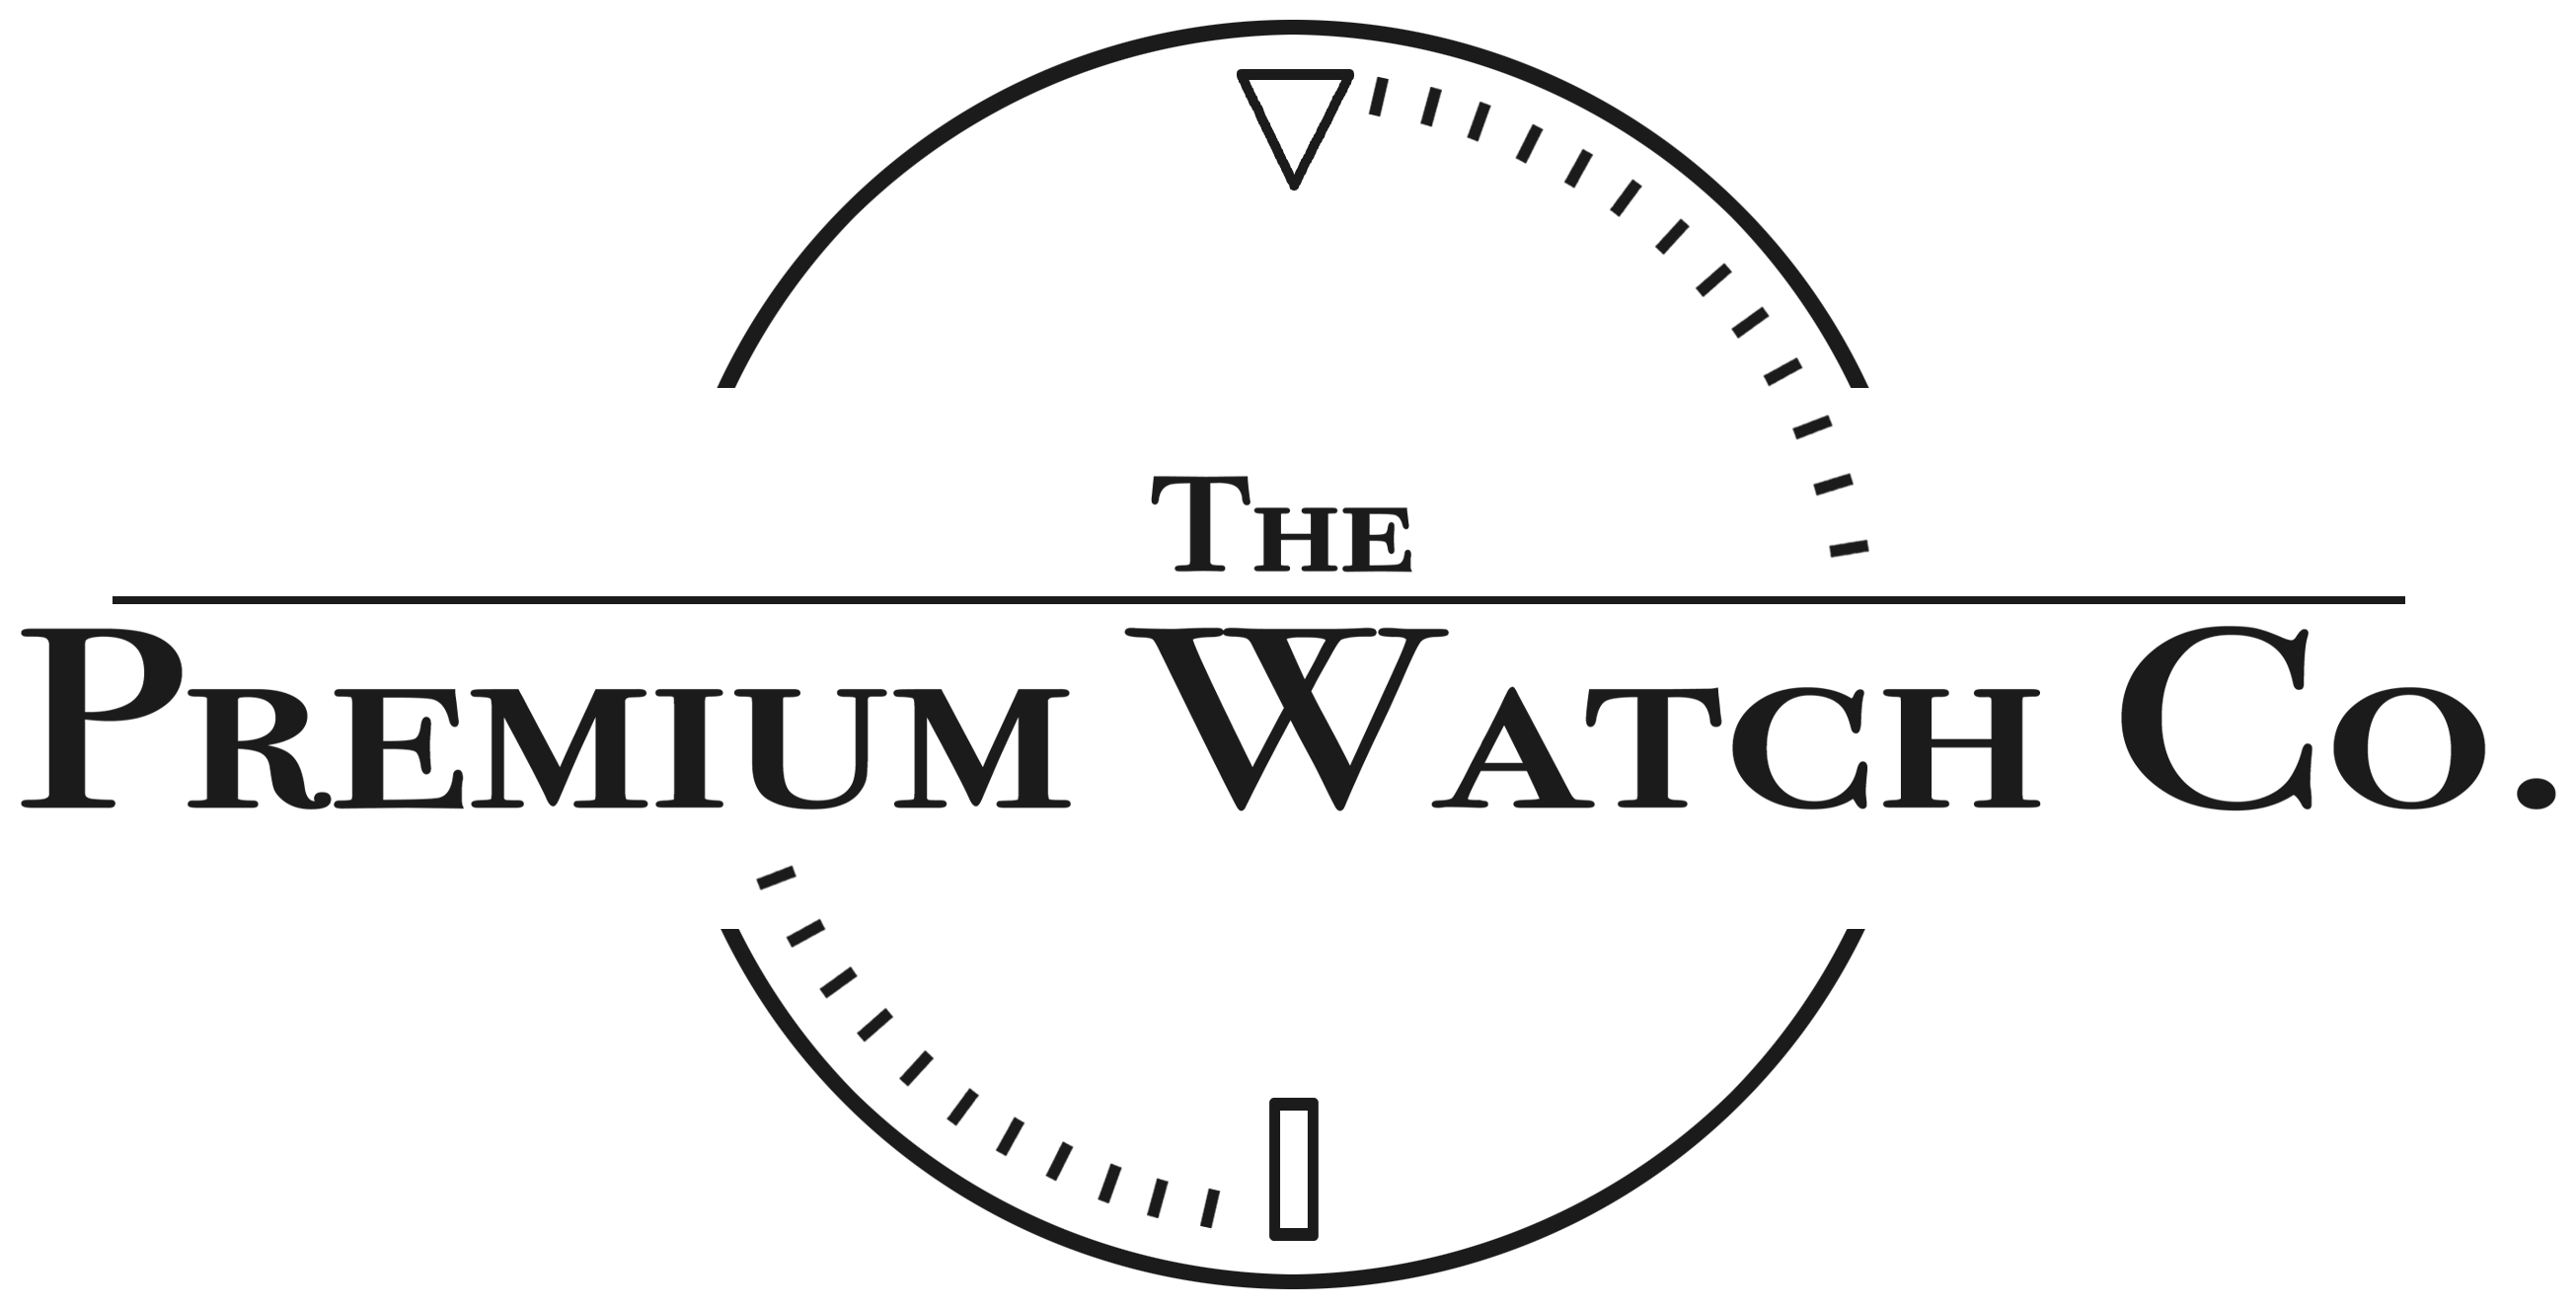 The Premium Watch Company